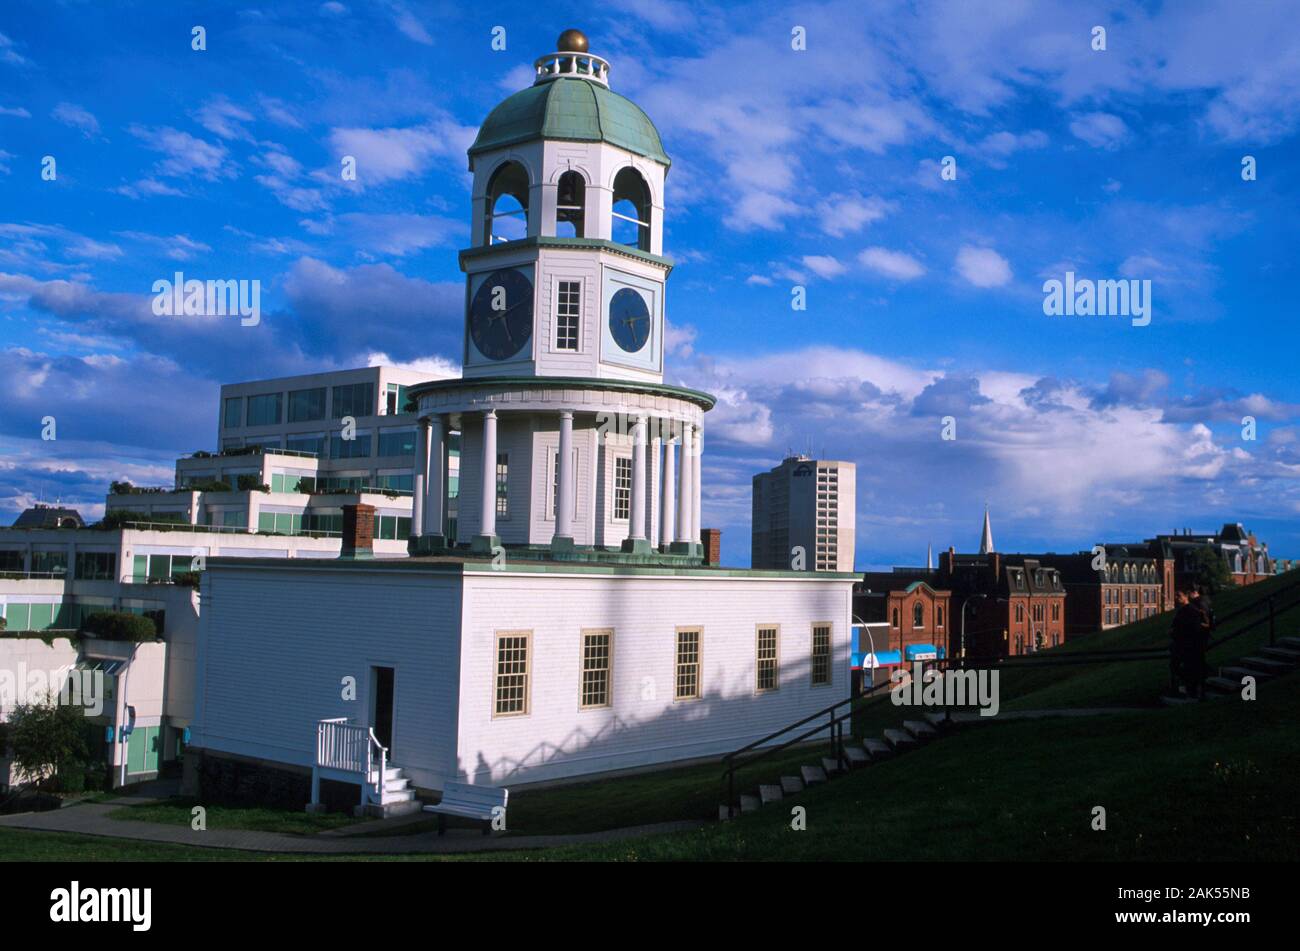 Turmuhr und aeltestes Gebaeude von Halifax, Kanada Osten | Utilizzo di tutto il mondo Foto Stock